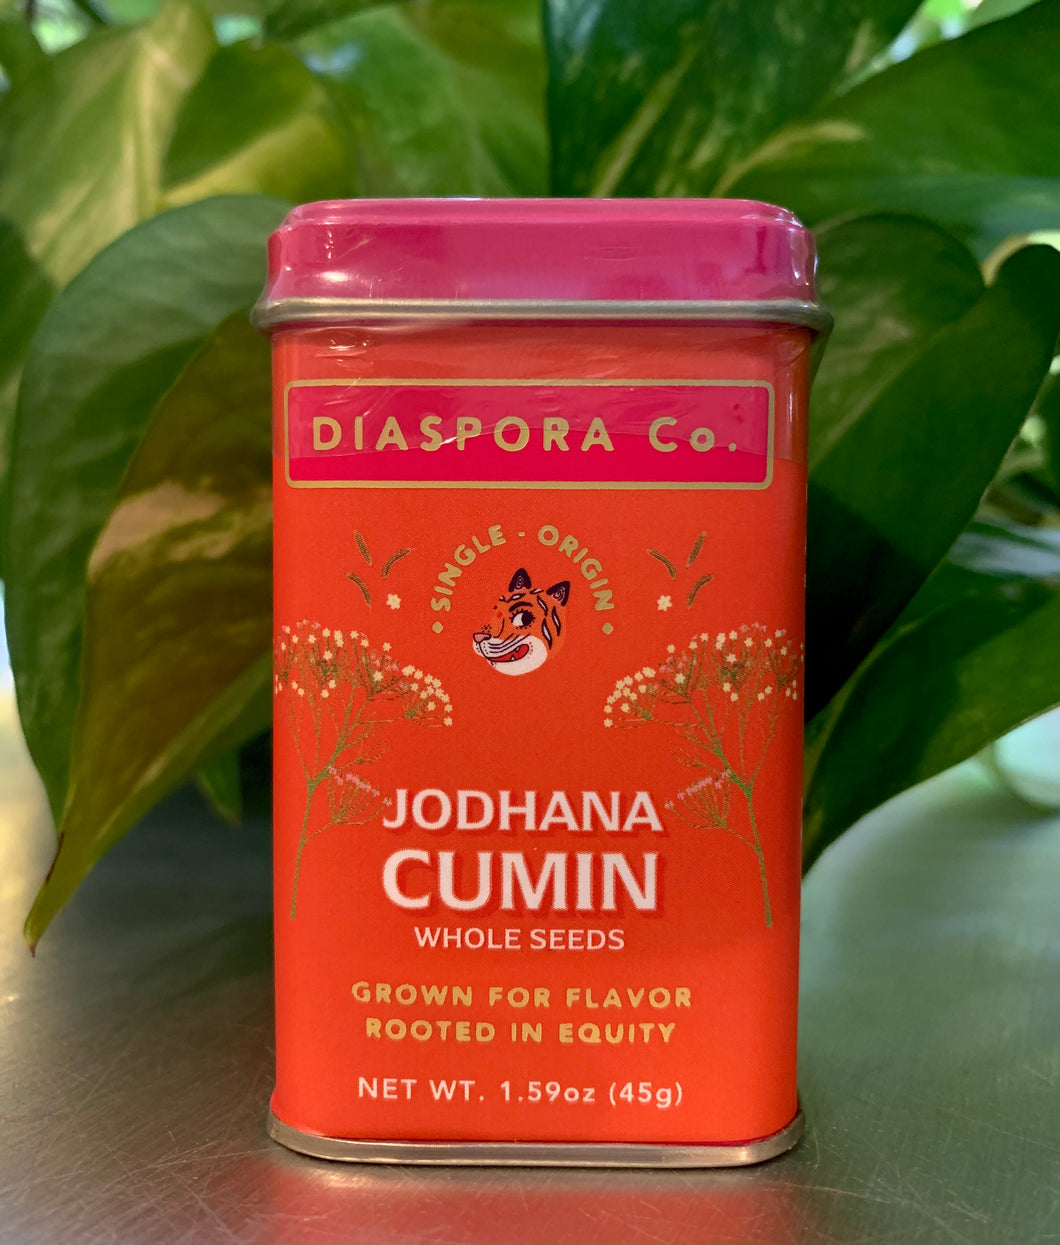 Diaspora Co. Jodhana Cumin